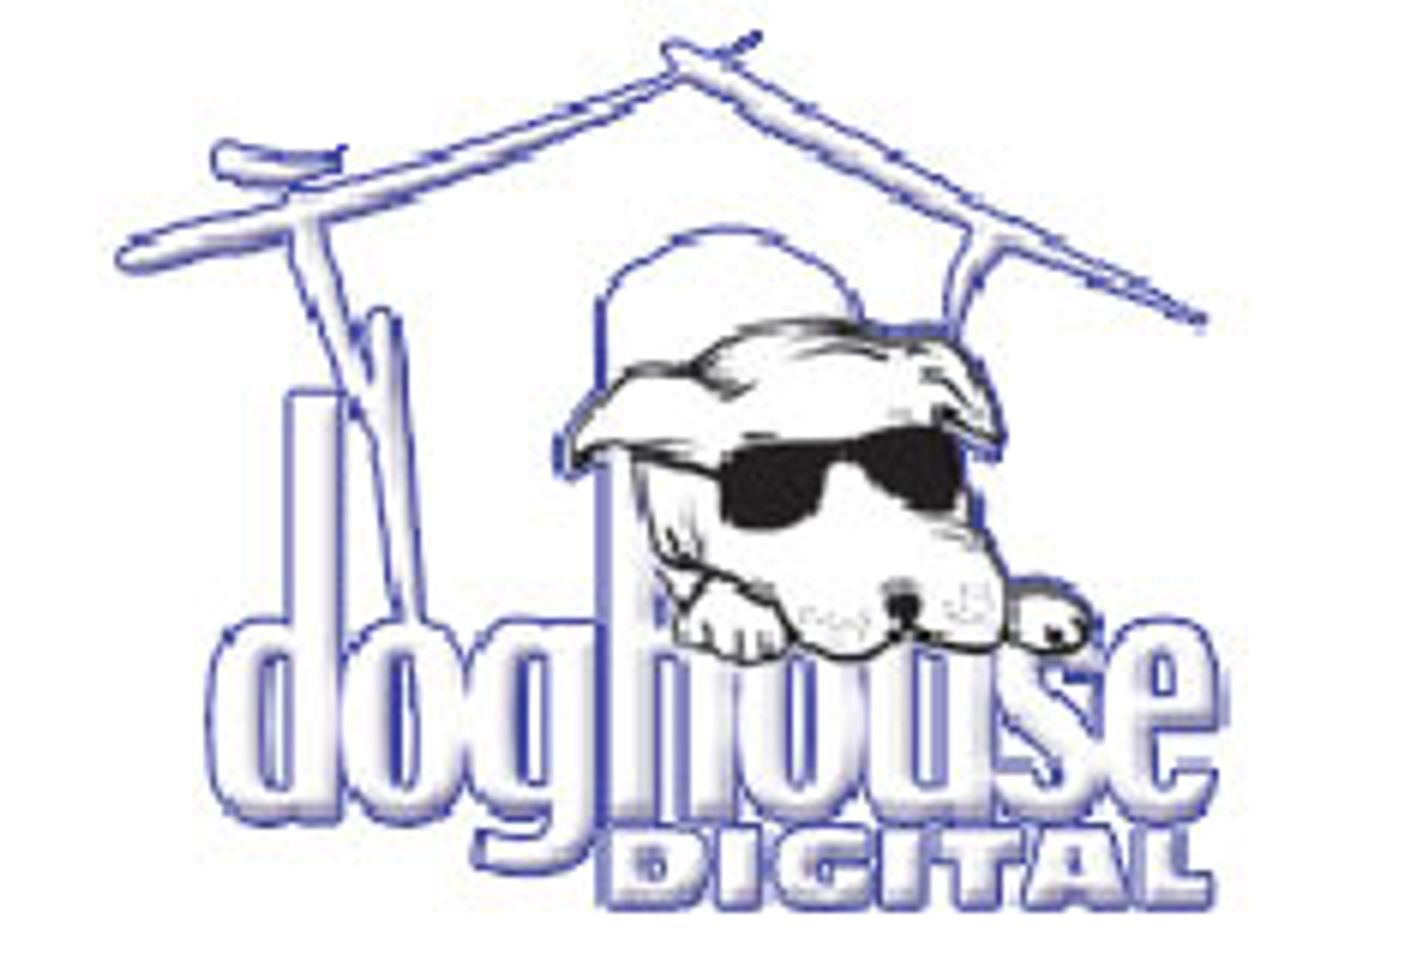 Doghouse Digital Seeking Directors